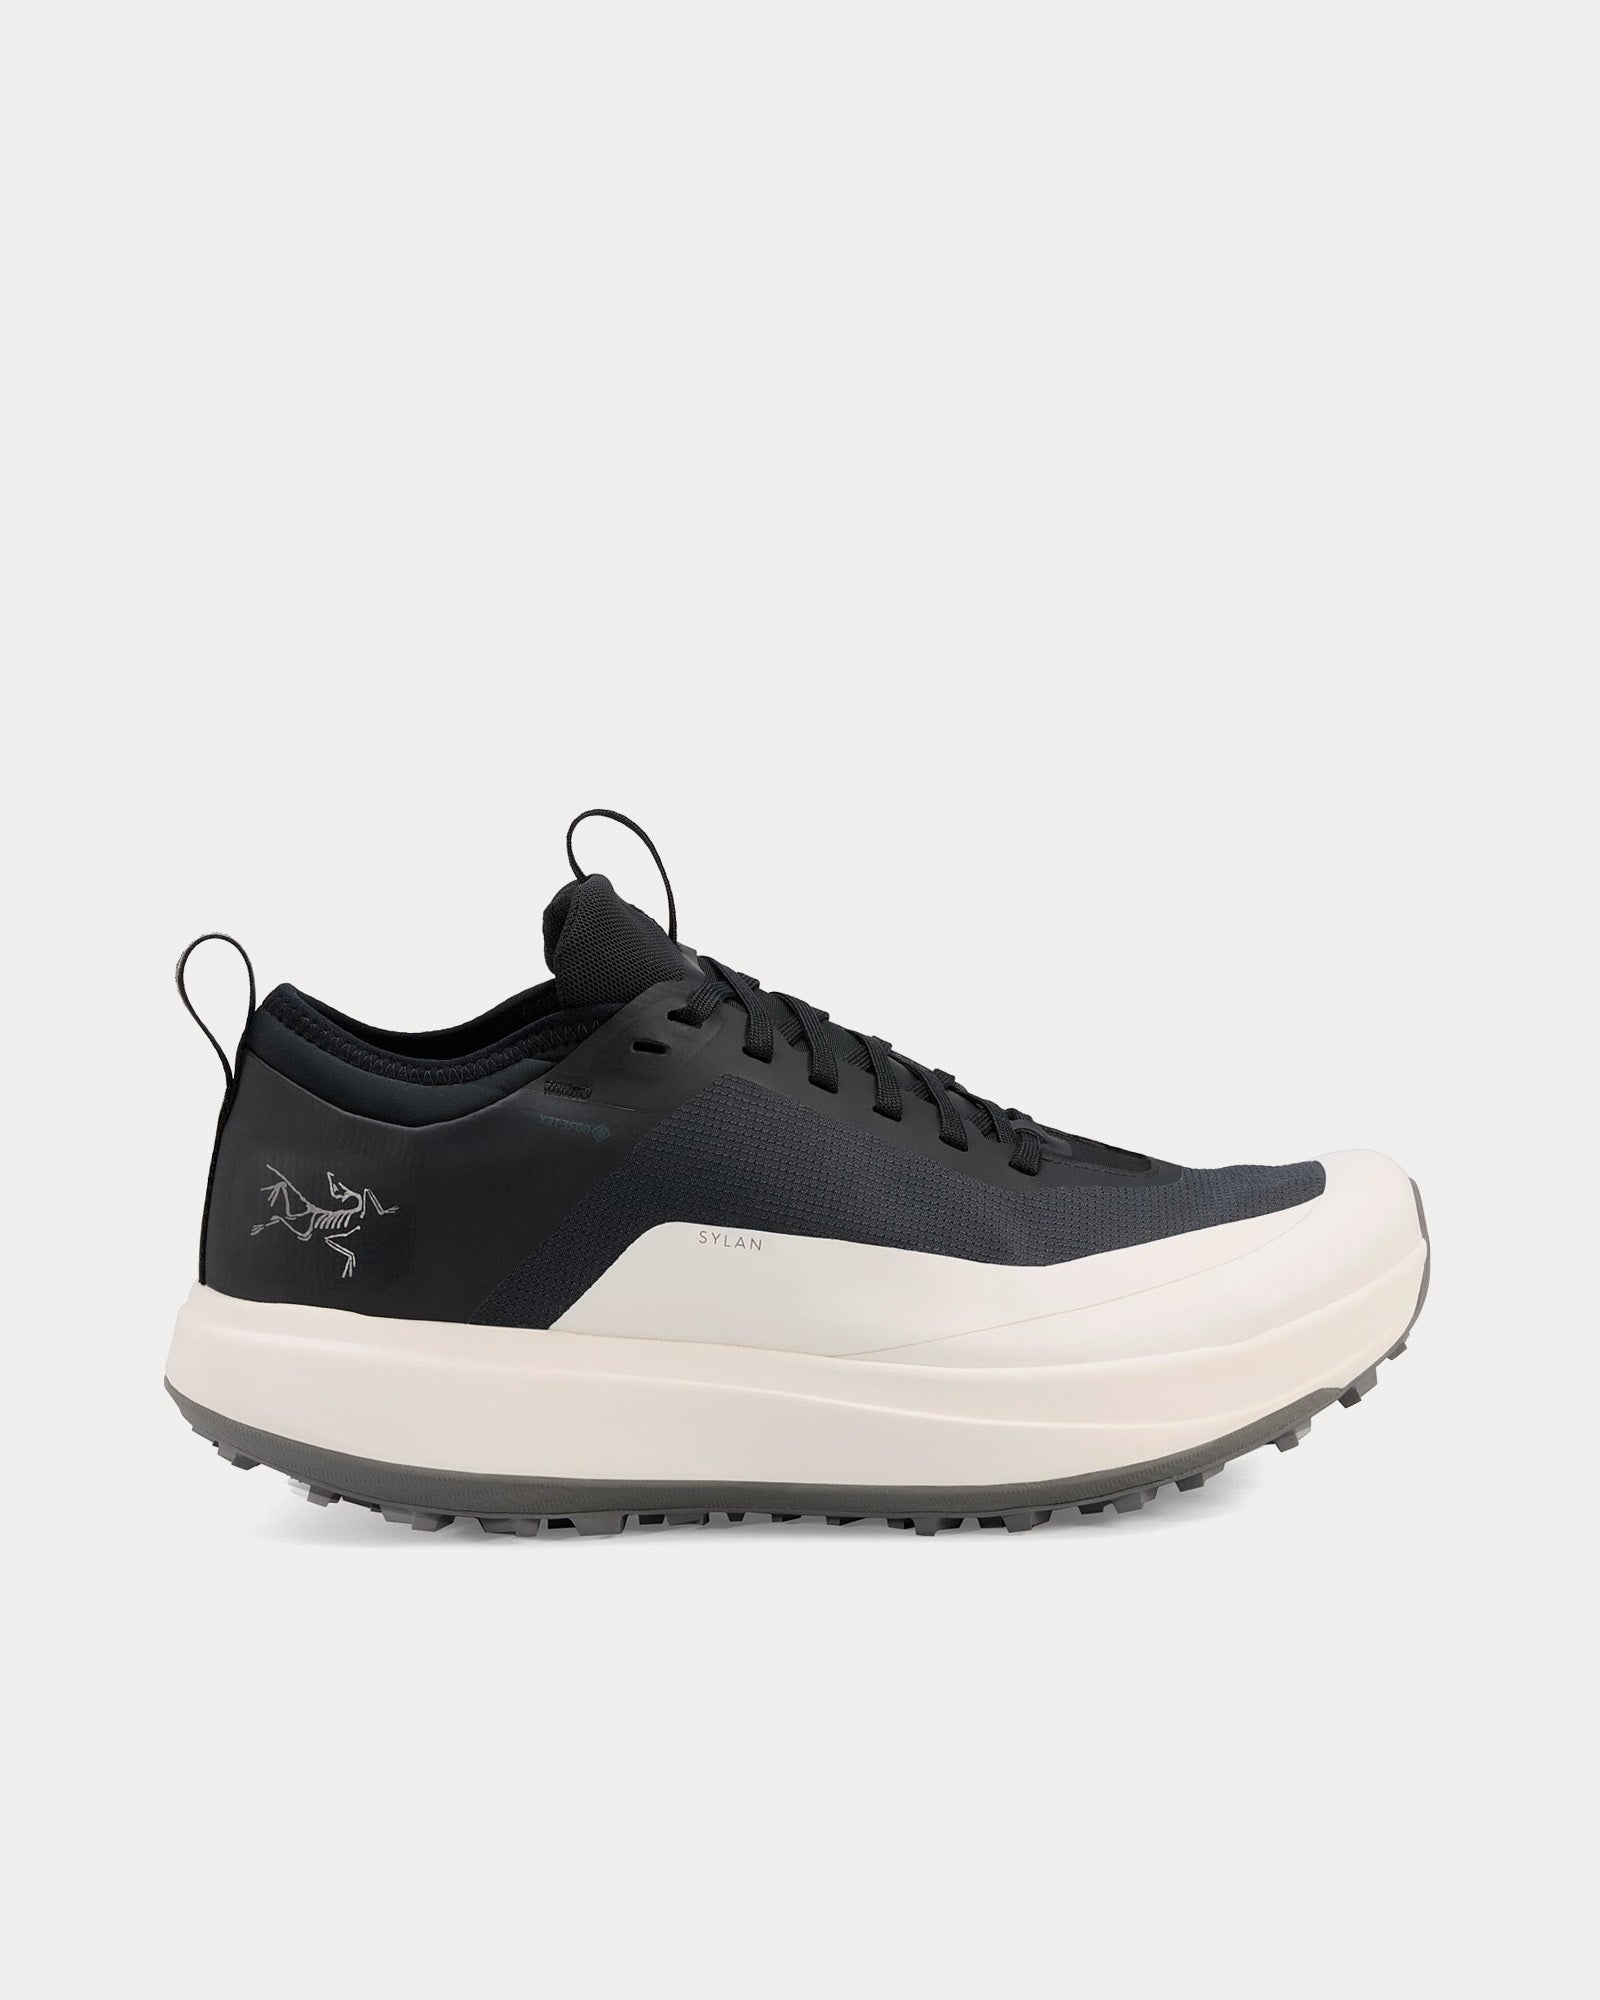 Arc'teryx - Sylan GTX Black / Arctic Silk Running Shoes